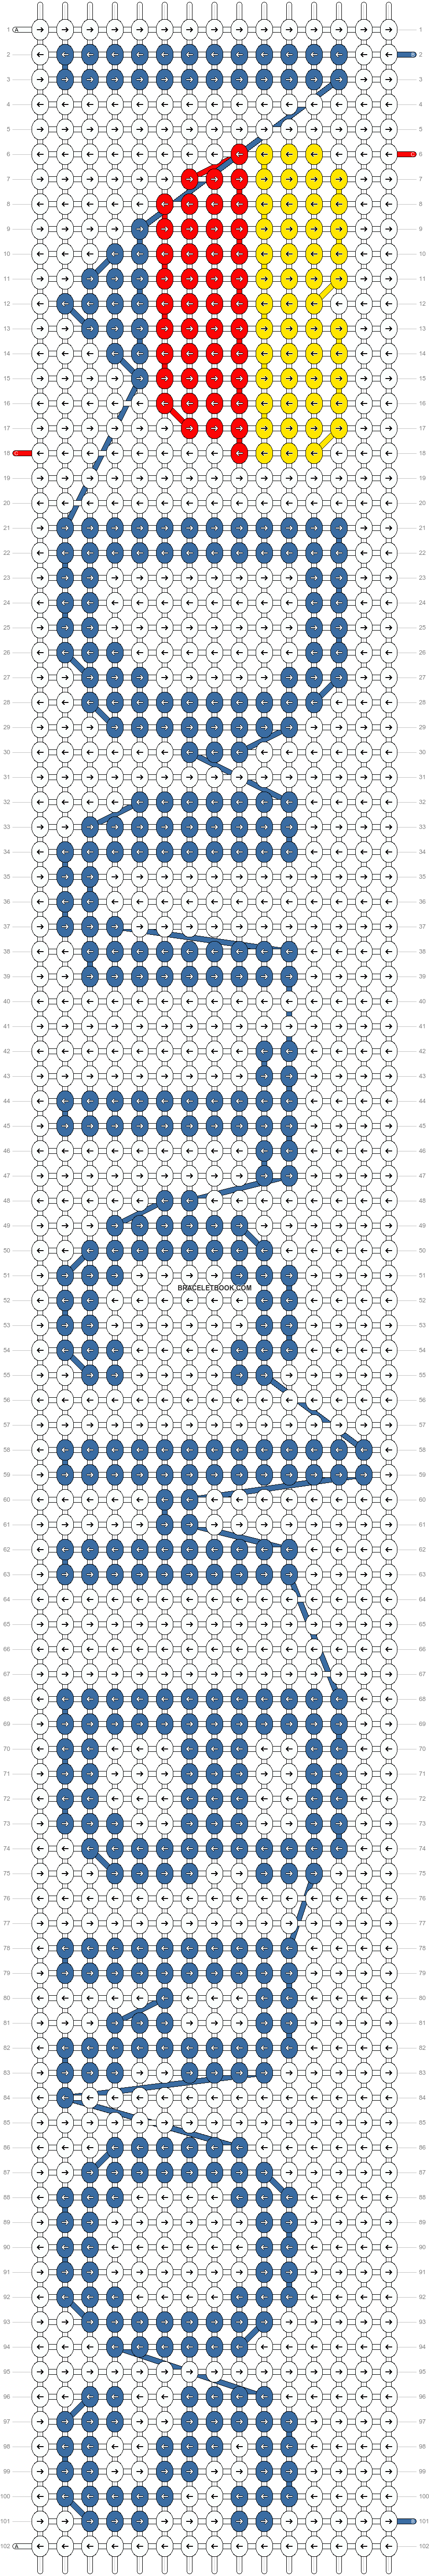 Alpha pattern #34204 pattern